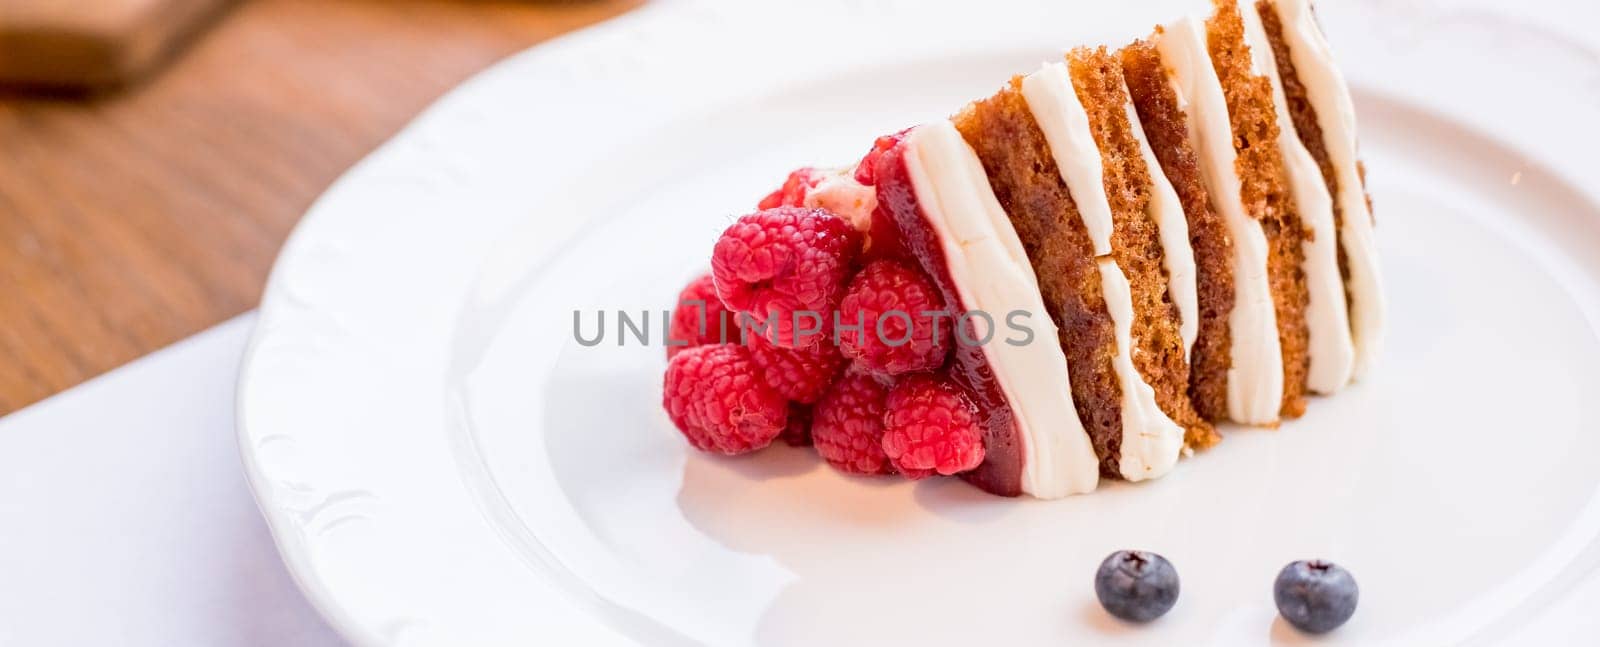 Homemade cheesecake with fresh berries and mint for dessert - healthy organic summer dessert pie cheesecake. Banner.